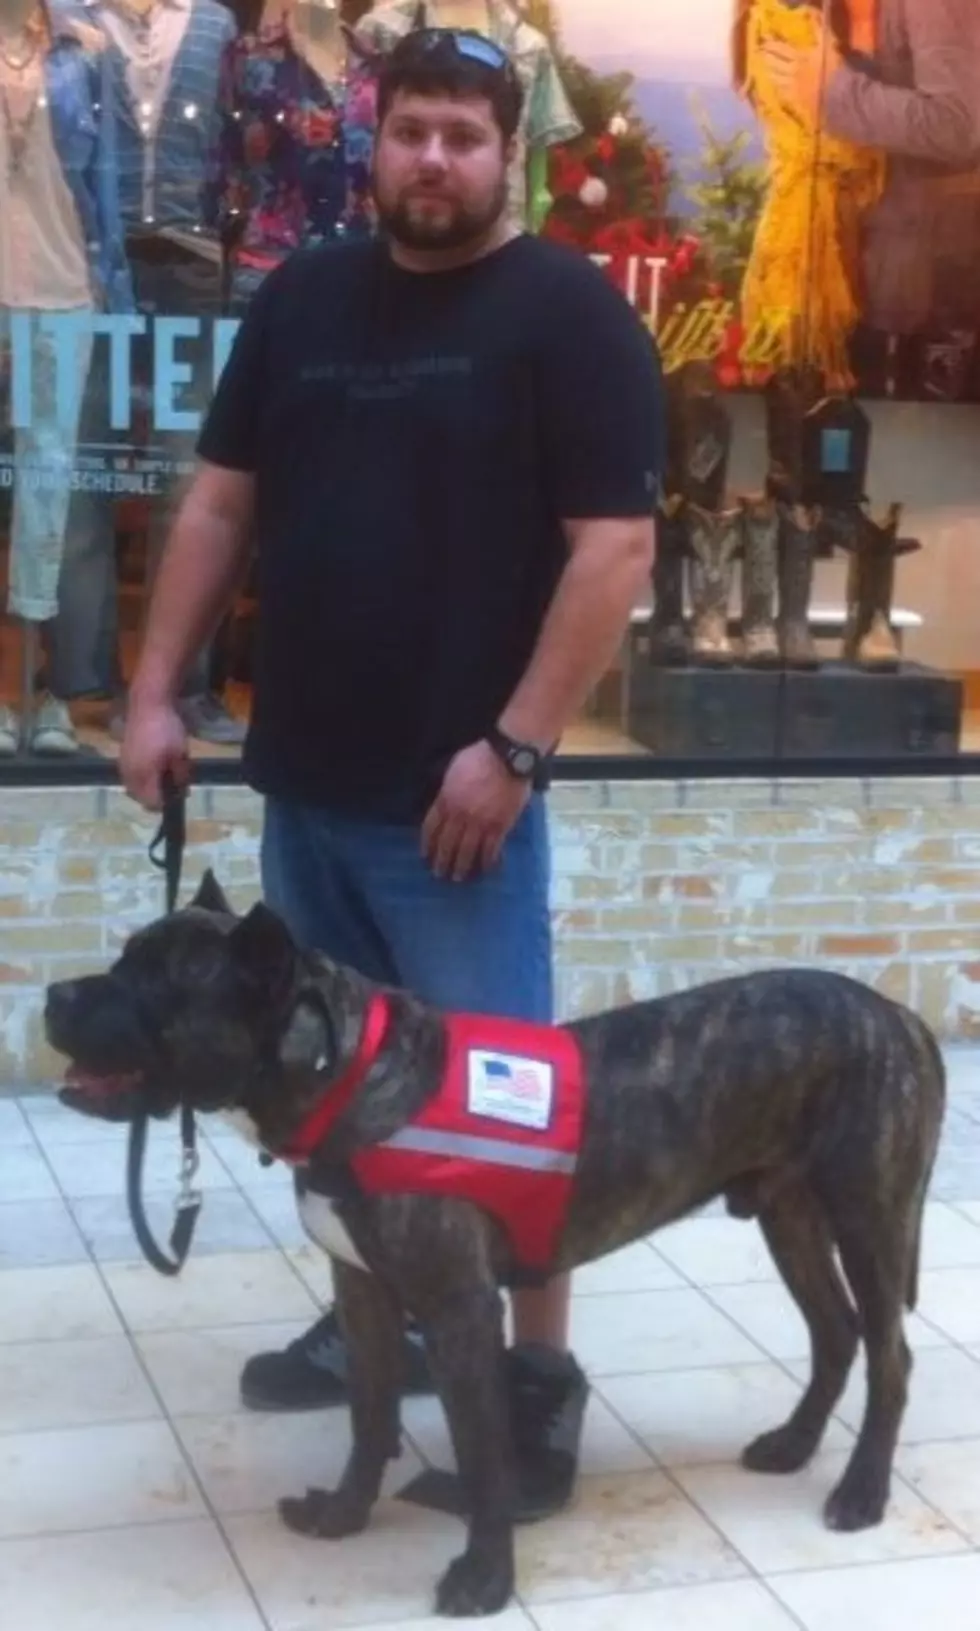 Disabled Veteran’s Service Dog — Dutch — Has been Sentenced